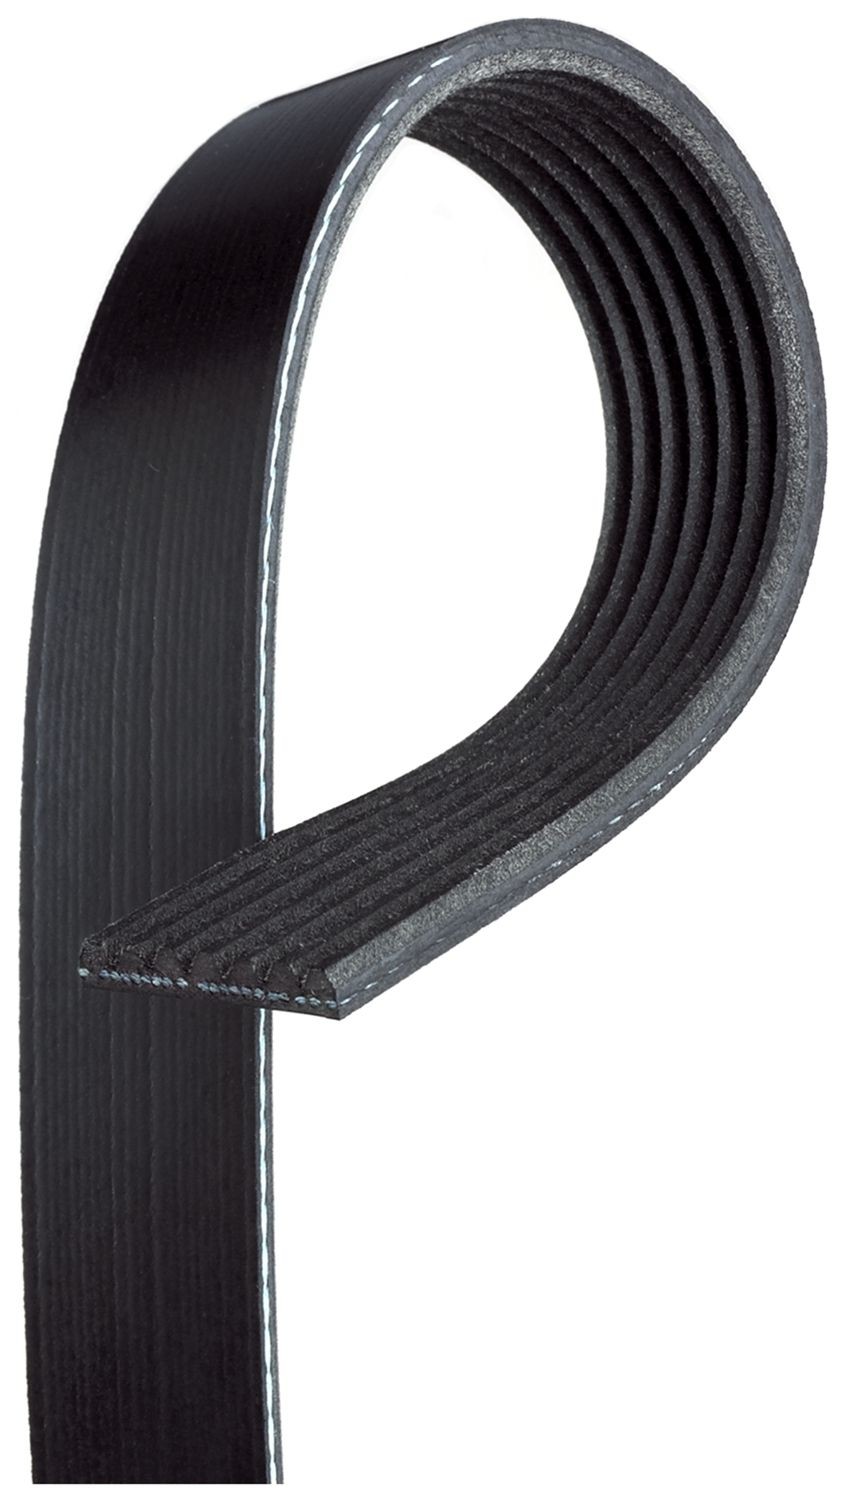 GATES 7PK1685 Serpentine belt 1685mm, 7, G-Force™ C12™ CVT Belt